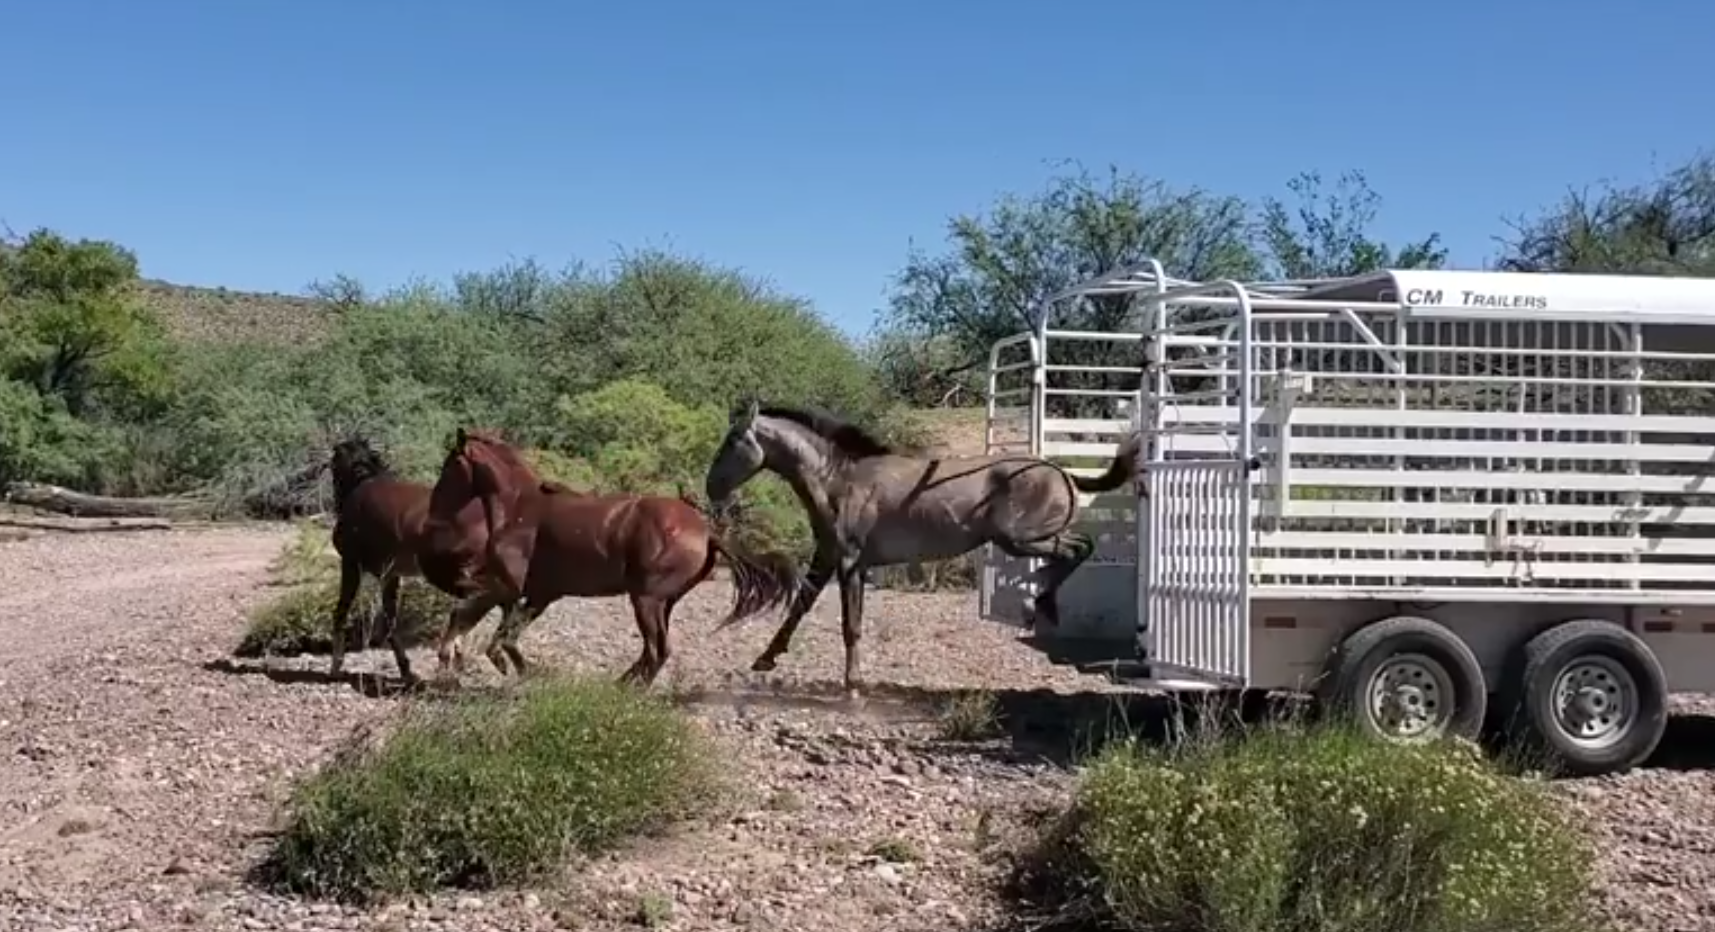 Released Salt River wild horses!